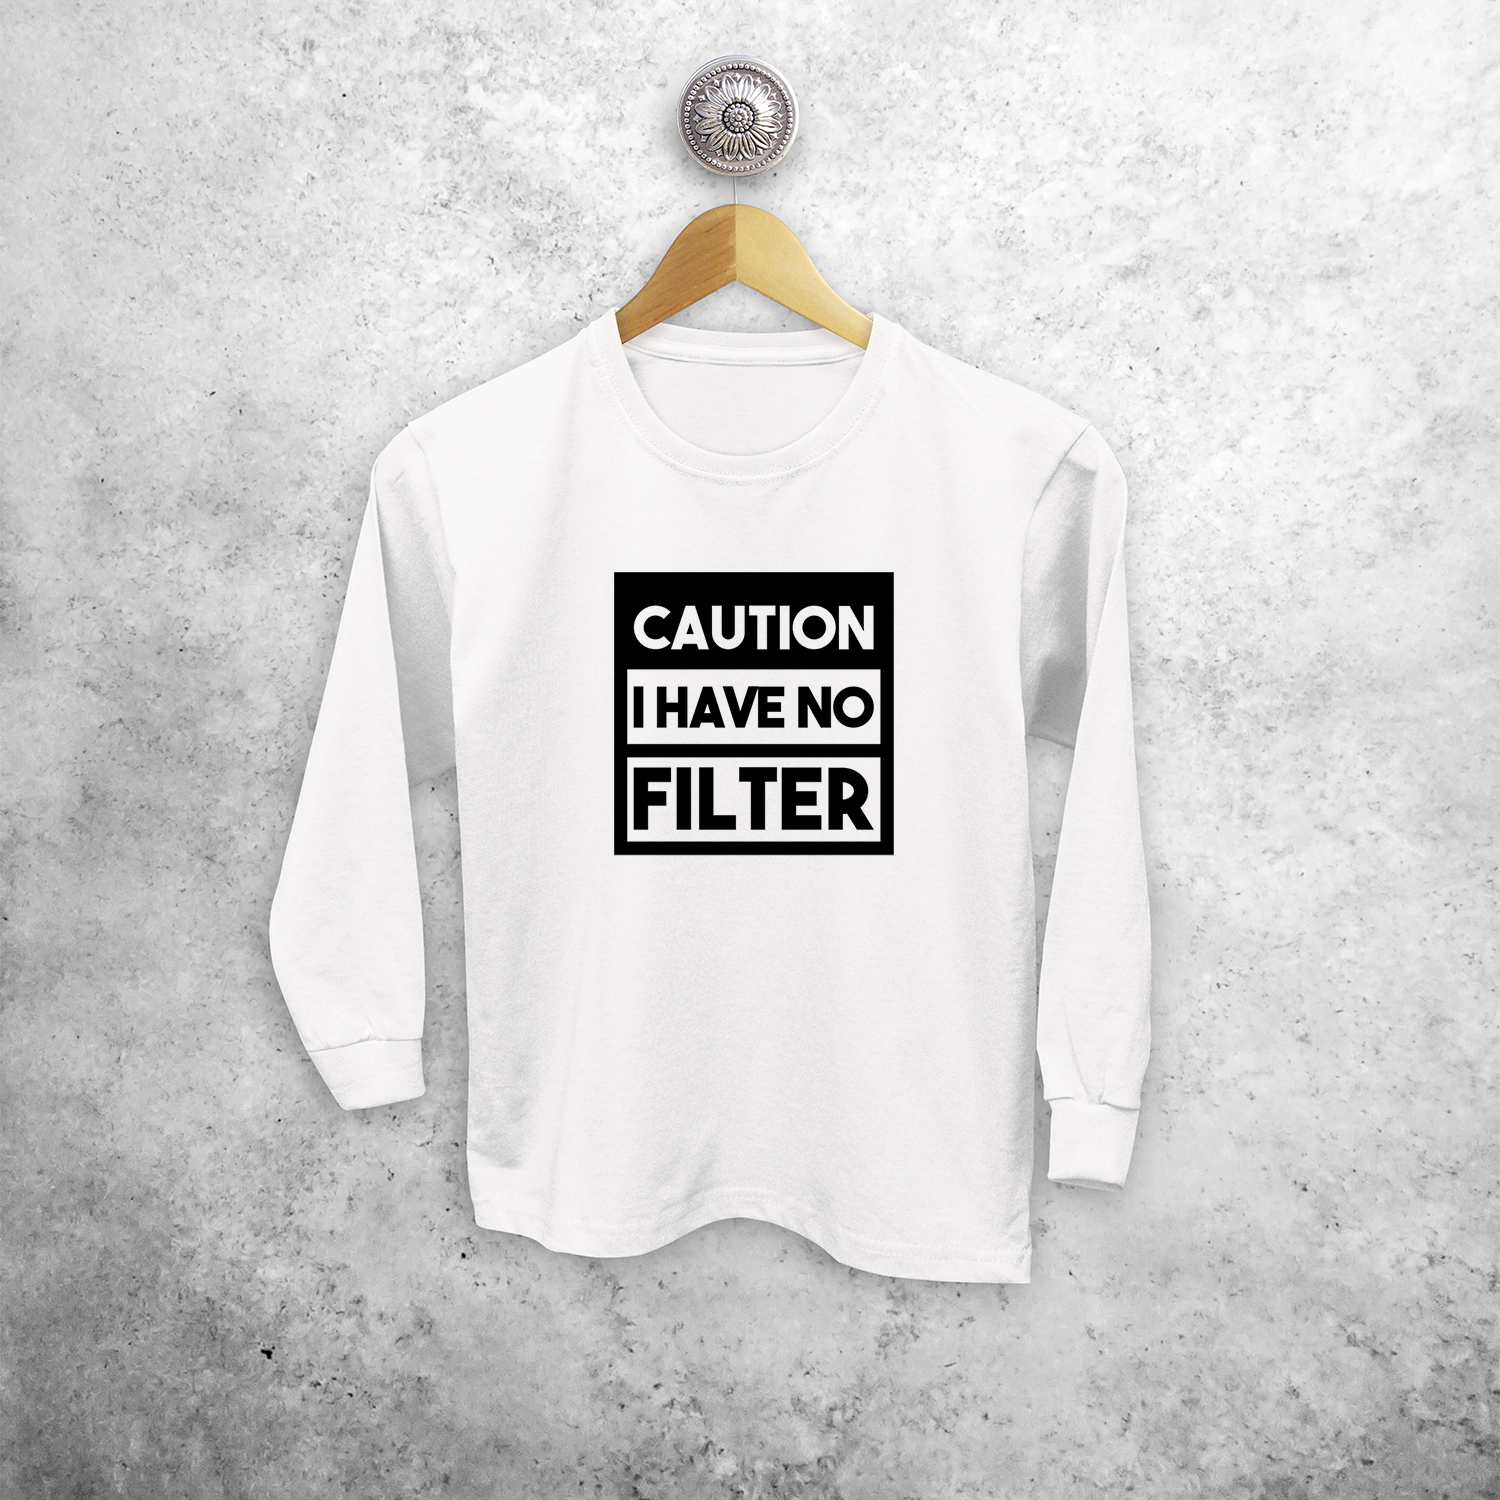 'Caution: I have no filter' kids longsleeve shirt